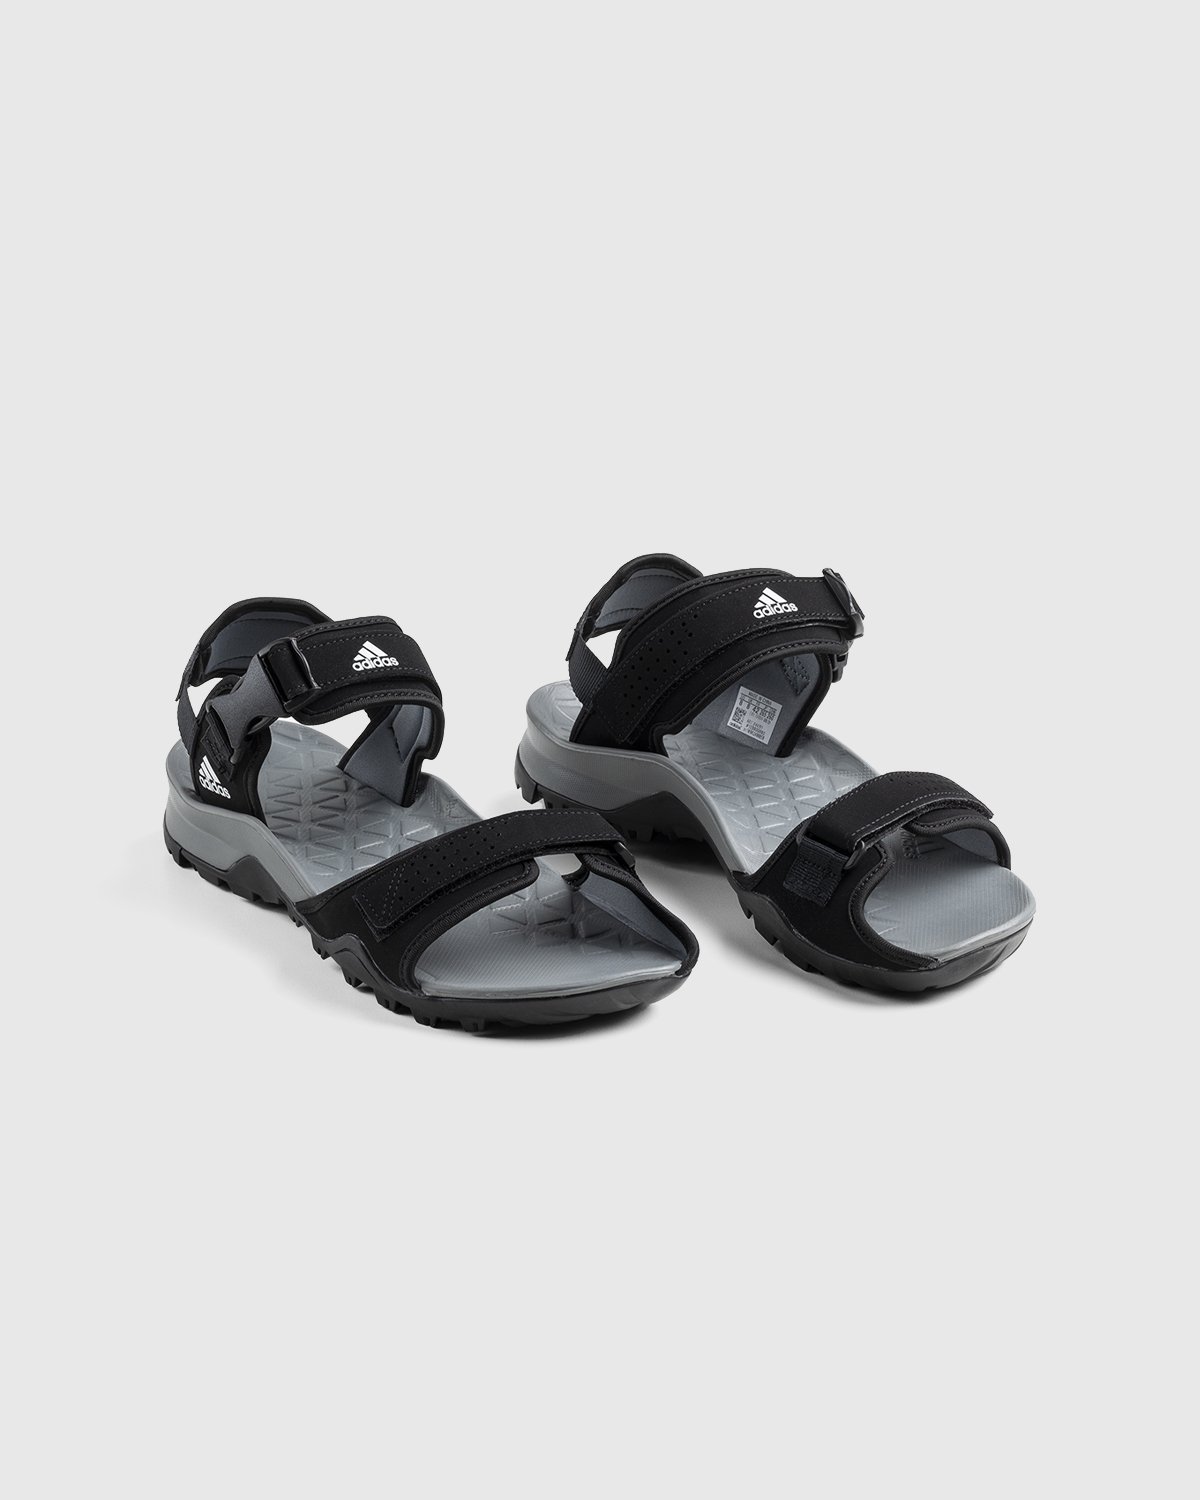 Adidas - Cyprex Ultra II Sandals Core Black Vista Grey Cloud White - Footwear - Black - Image 3